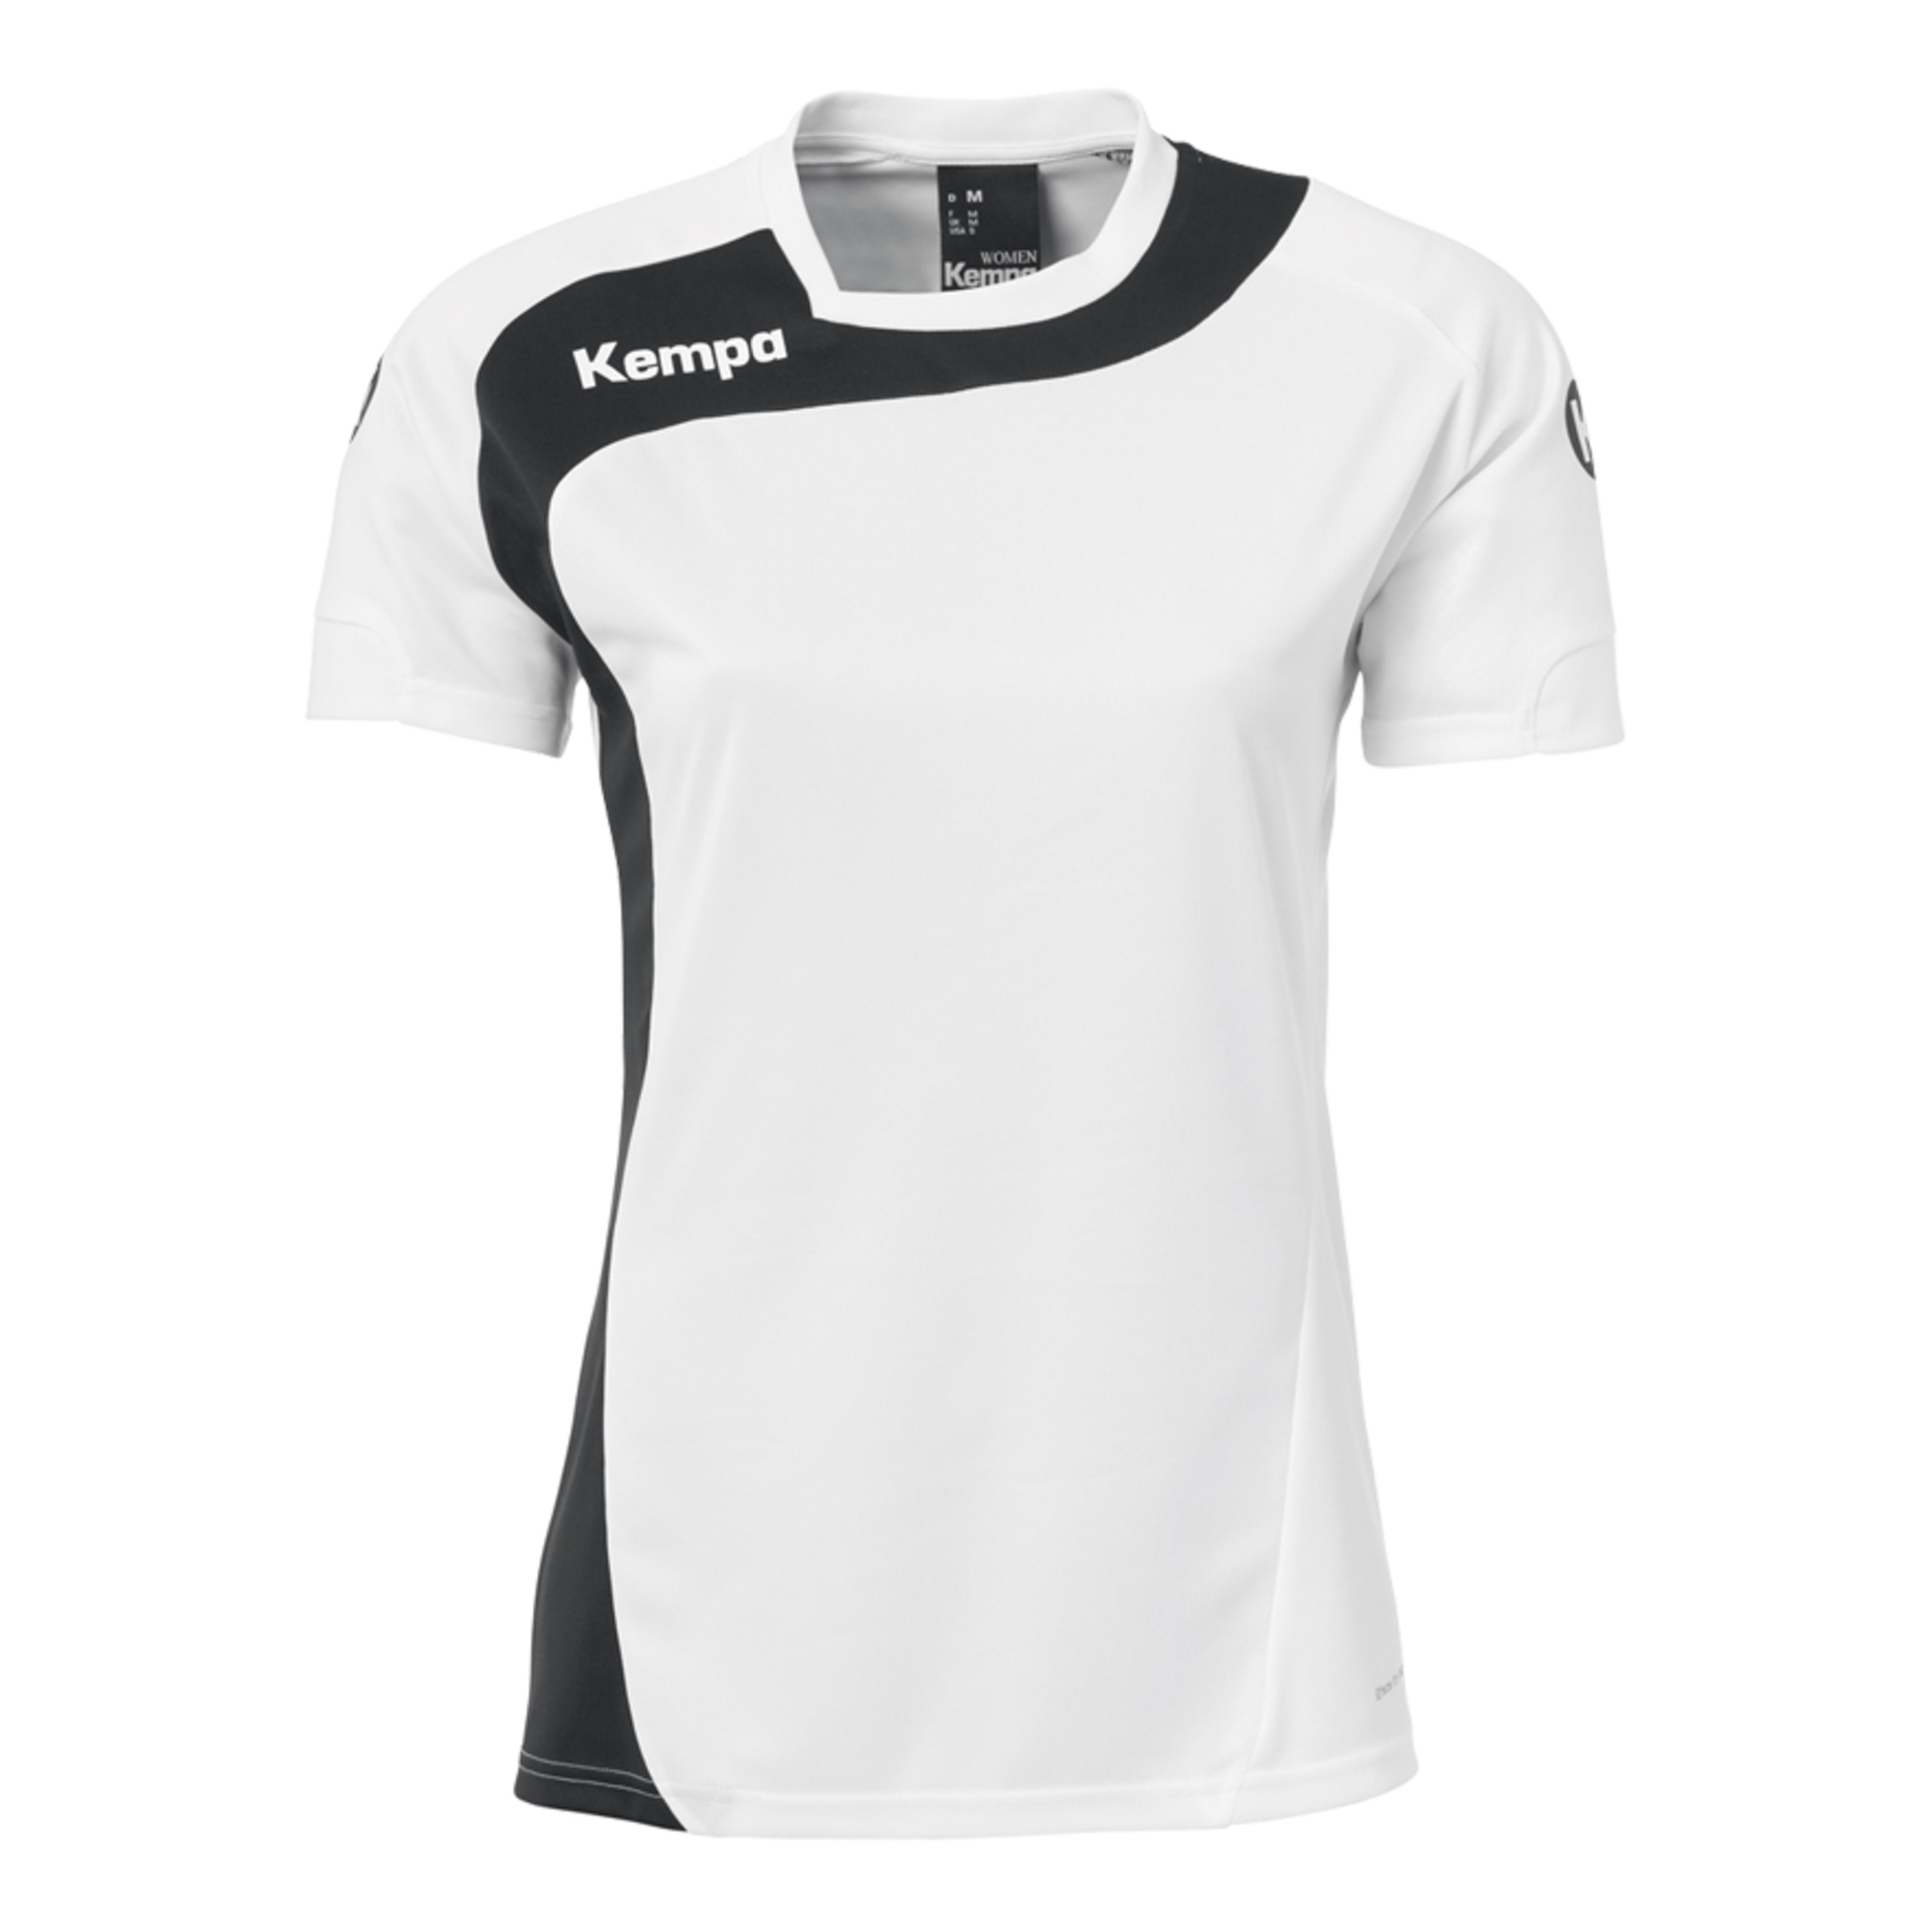 Peak Camiseta De Mujer Blanco/negro Kempa